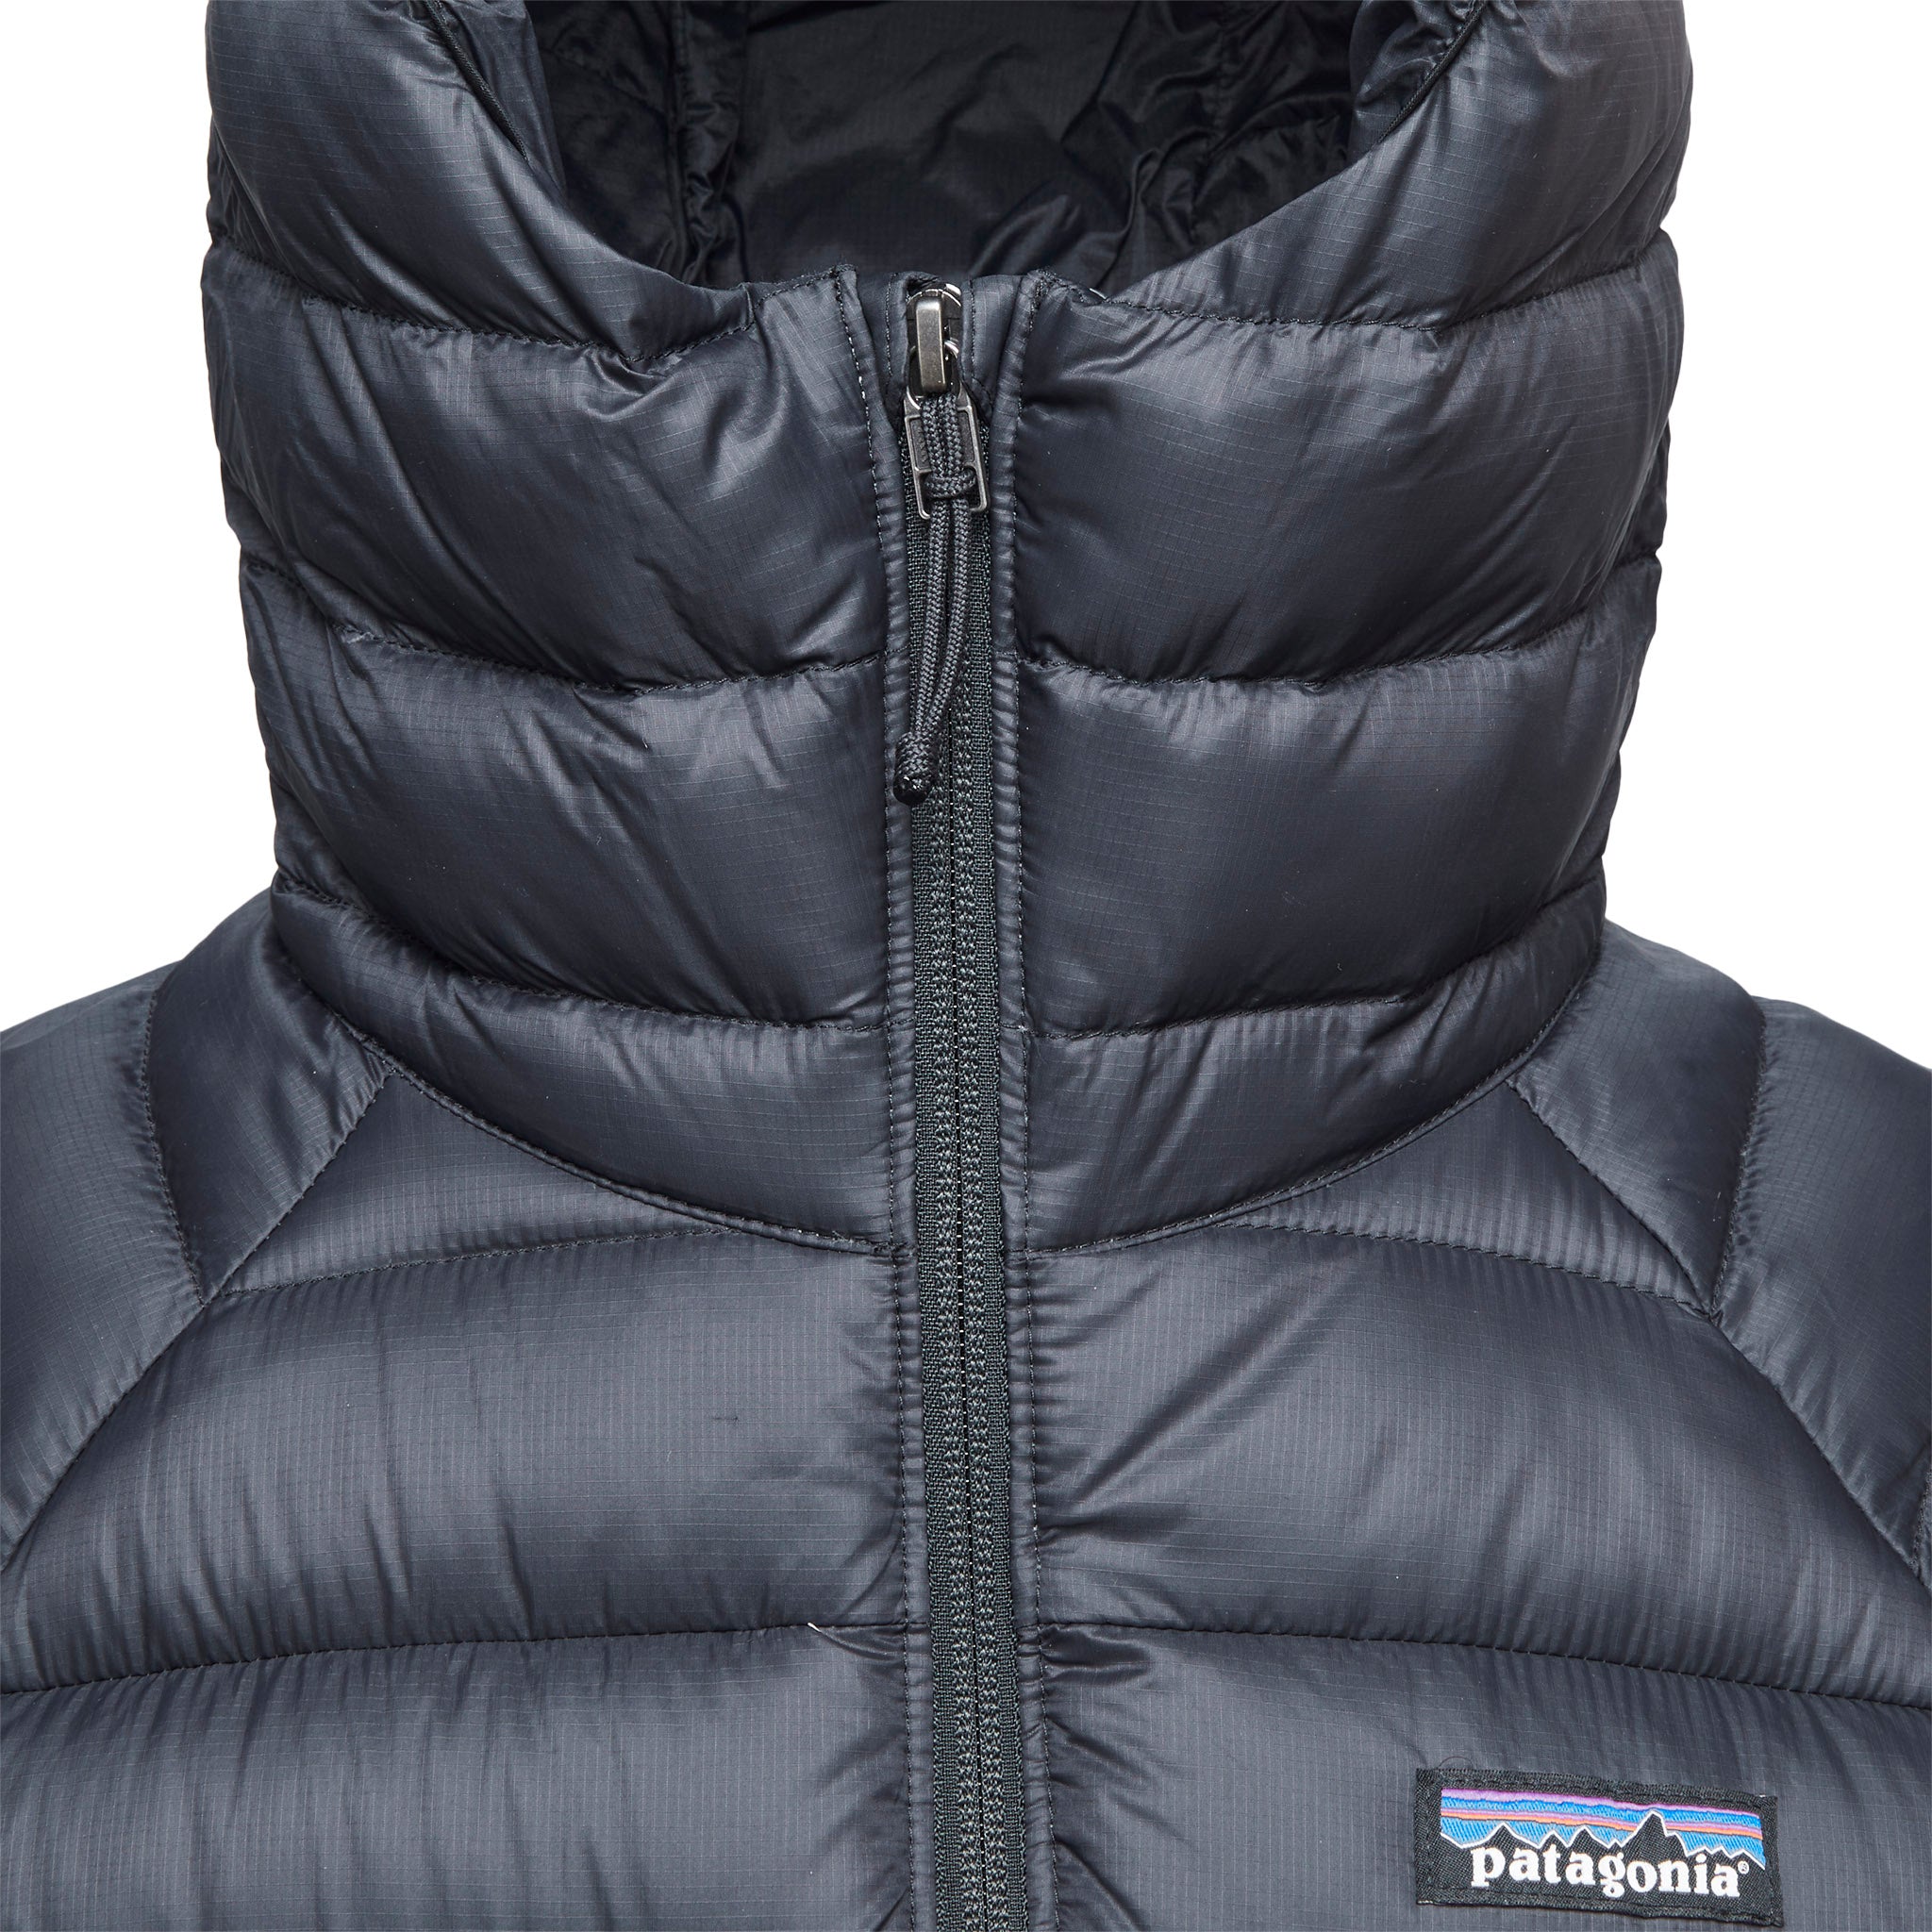 Patagonia Down Sweater Jacket - Women's Extra Large XL ~ $279 84684 Black